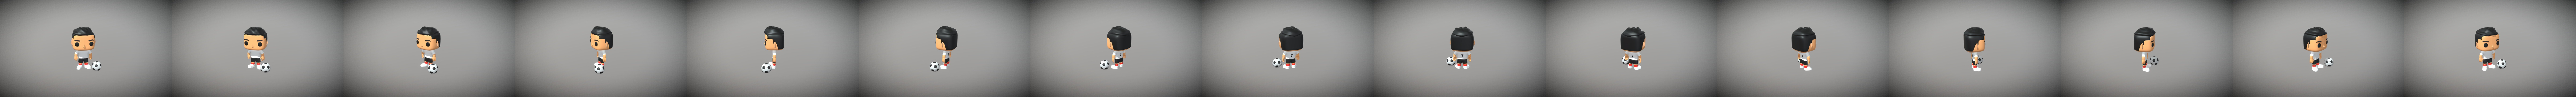 Cristiano Ronaldo 3D Collectible Figure Funko Pop Style - Limited